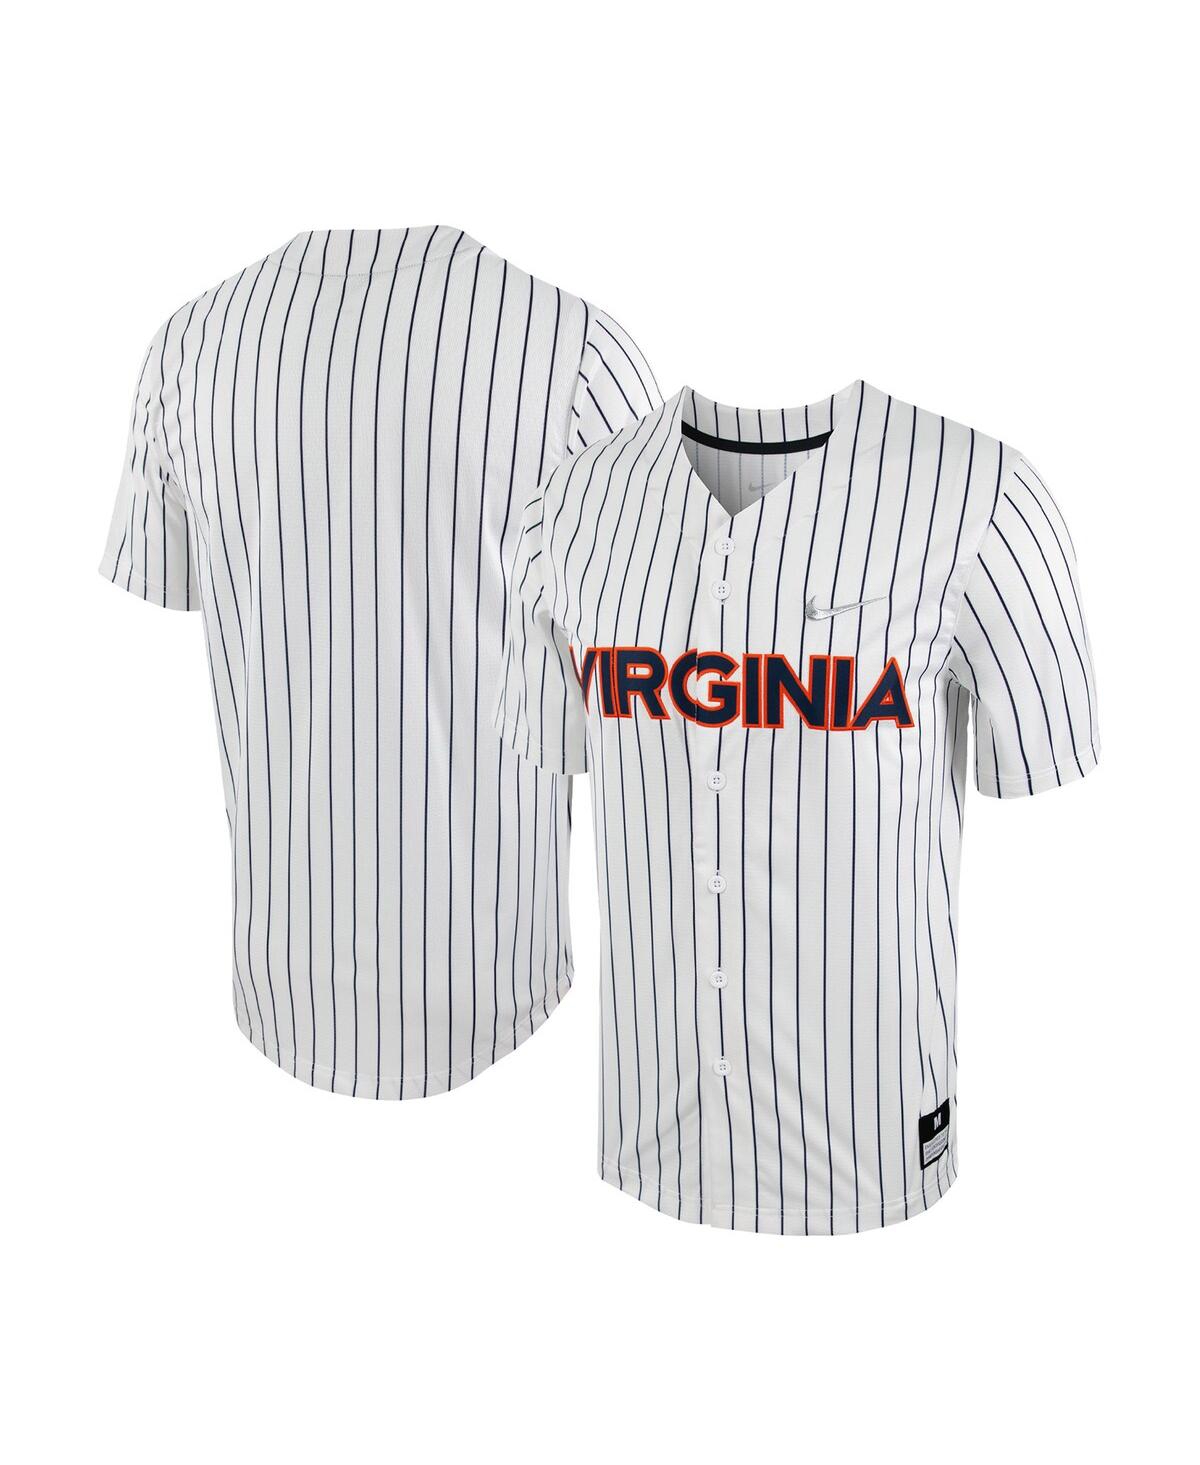 Men's Nike Black/Gold Vanderbilt Commodores Pinstripe Replica Full-Button  Baseball Jersey